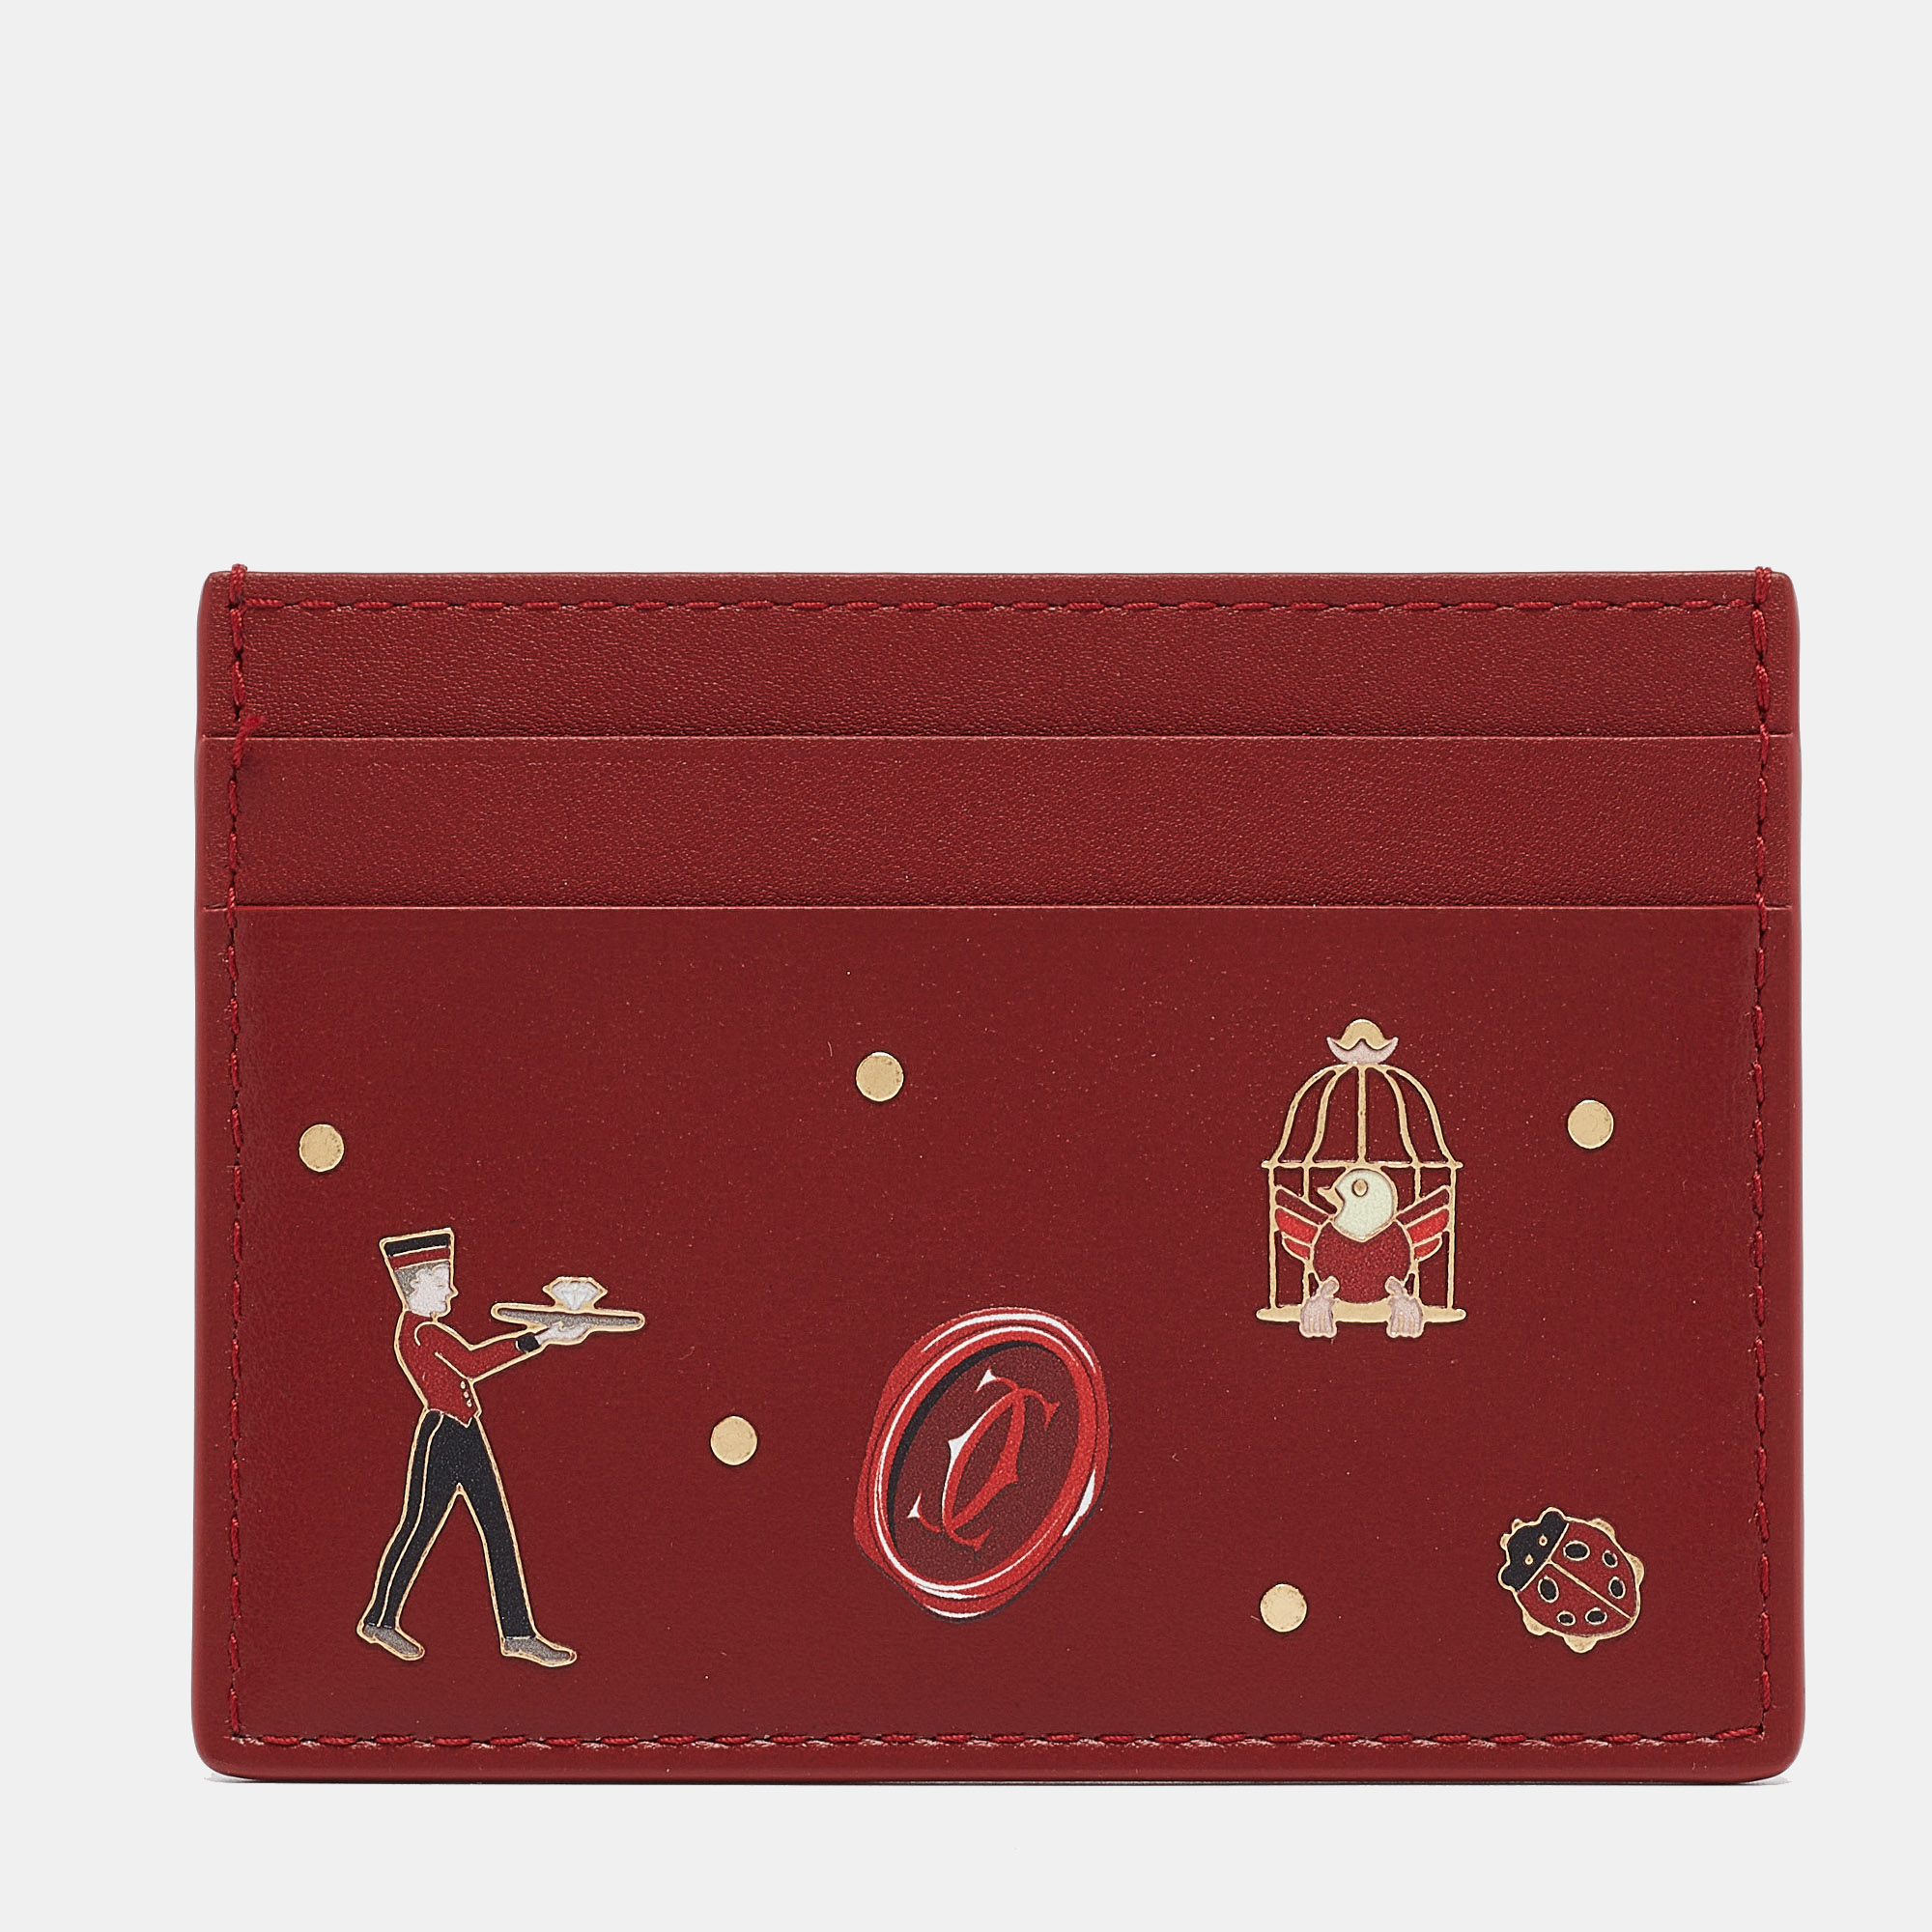 Cartier red leather diabolo de cartier card holder